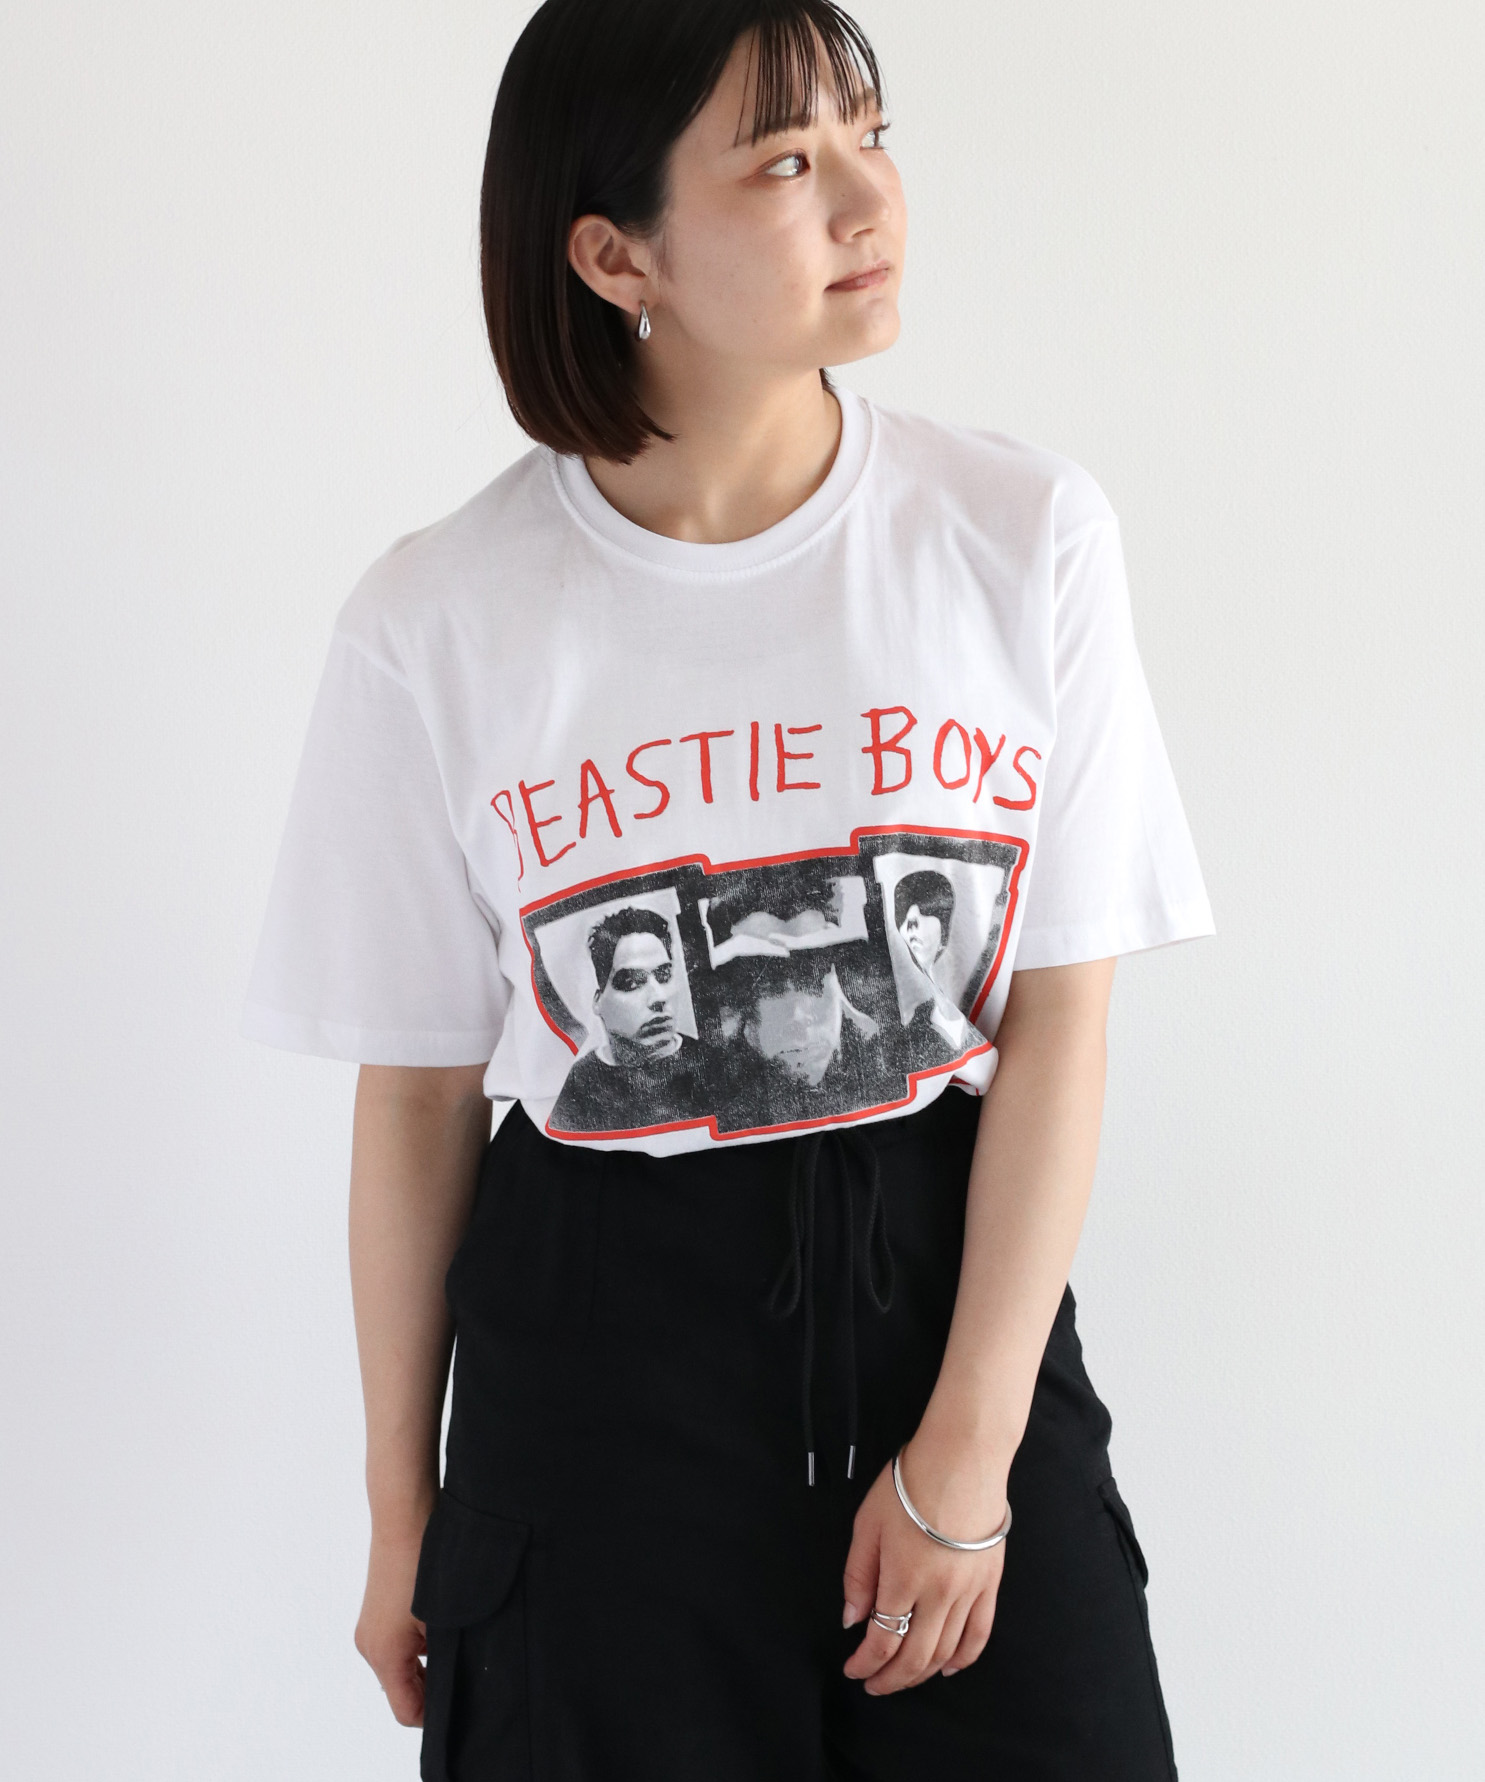 BEASTIE BOYS リミテッドエディションBOX オリジナルTシャツ付 ...